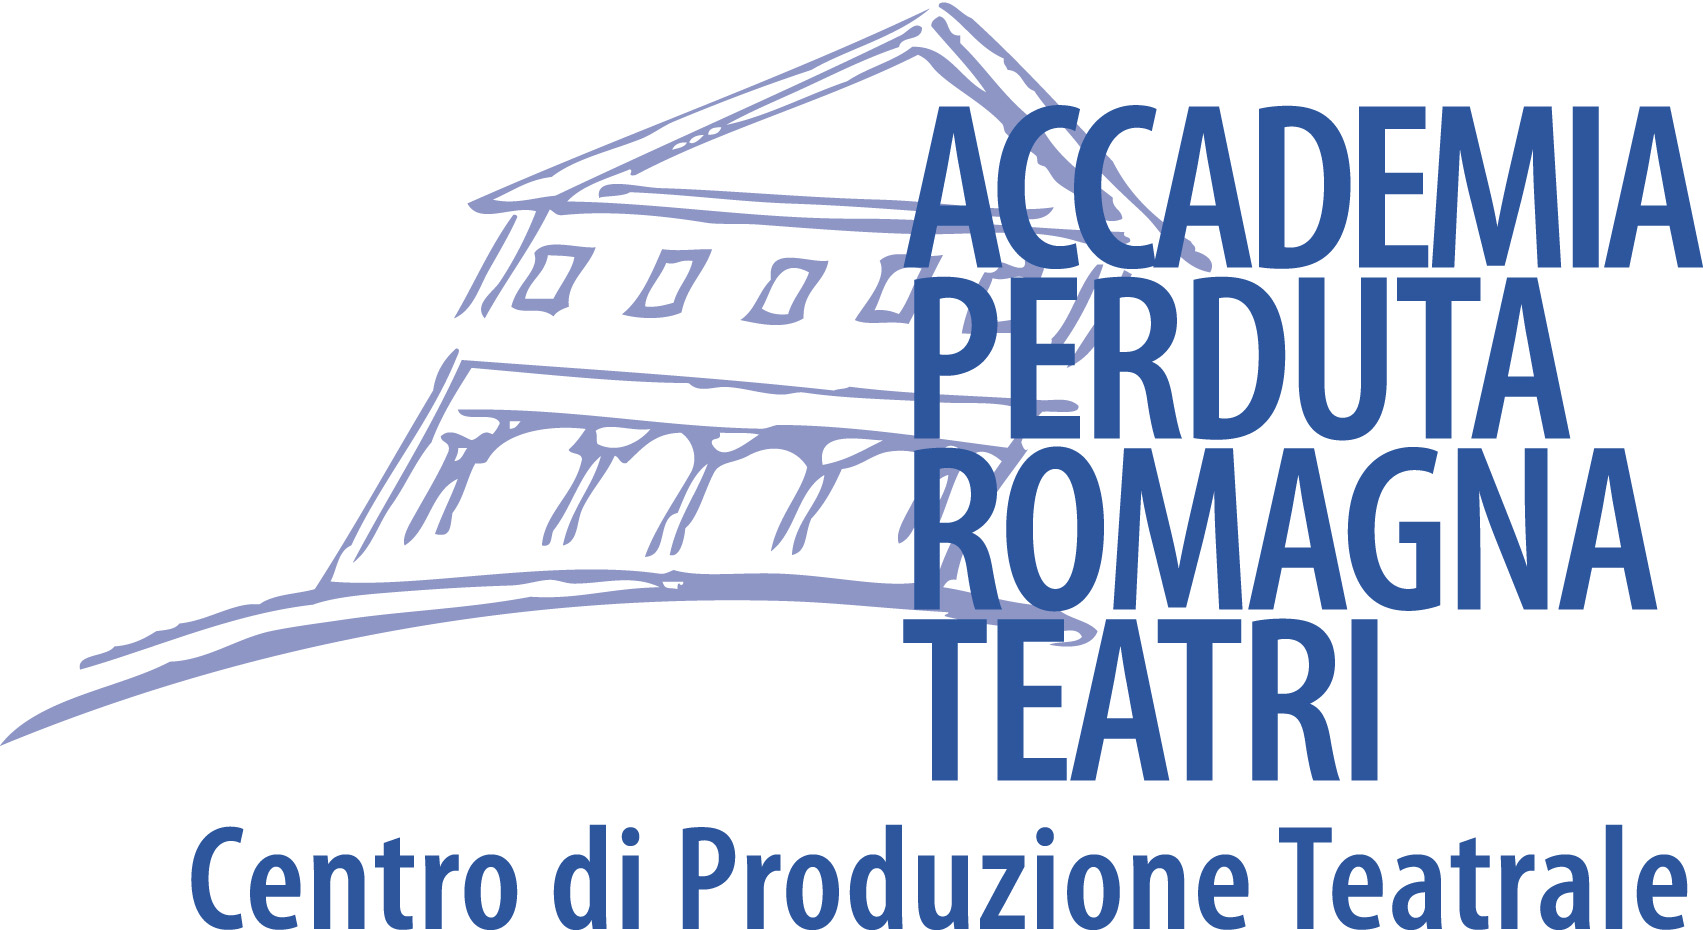 Immagini di Accademia Perduta/Romagna Teatri